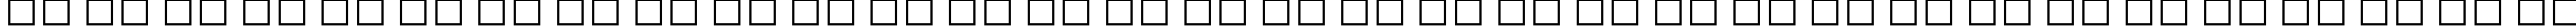 Пример написания русского алфавита шрифтом Perpetua Italic